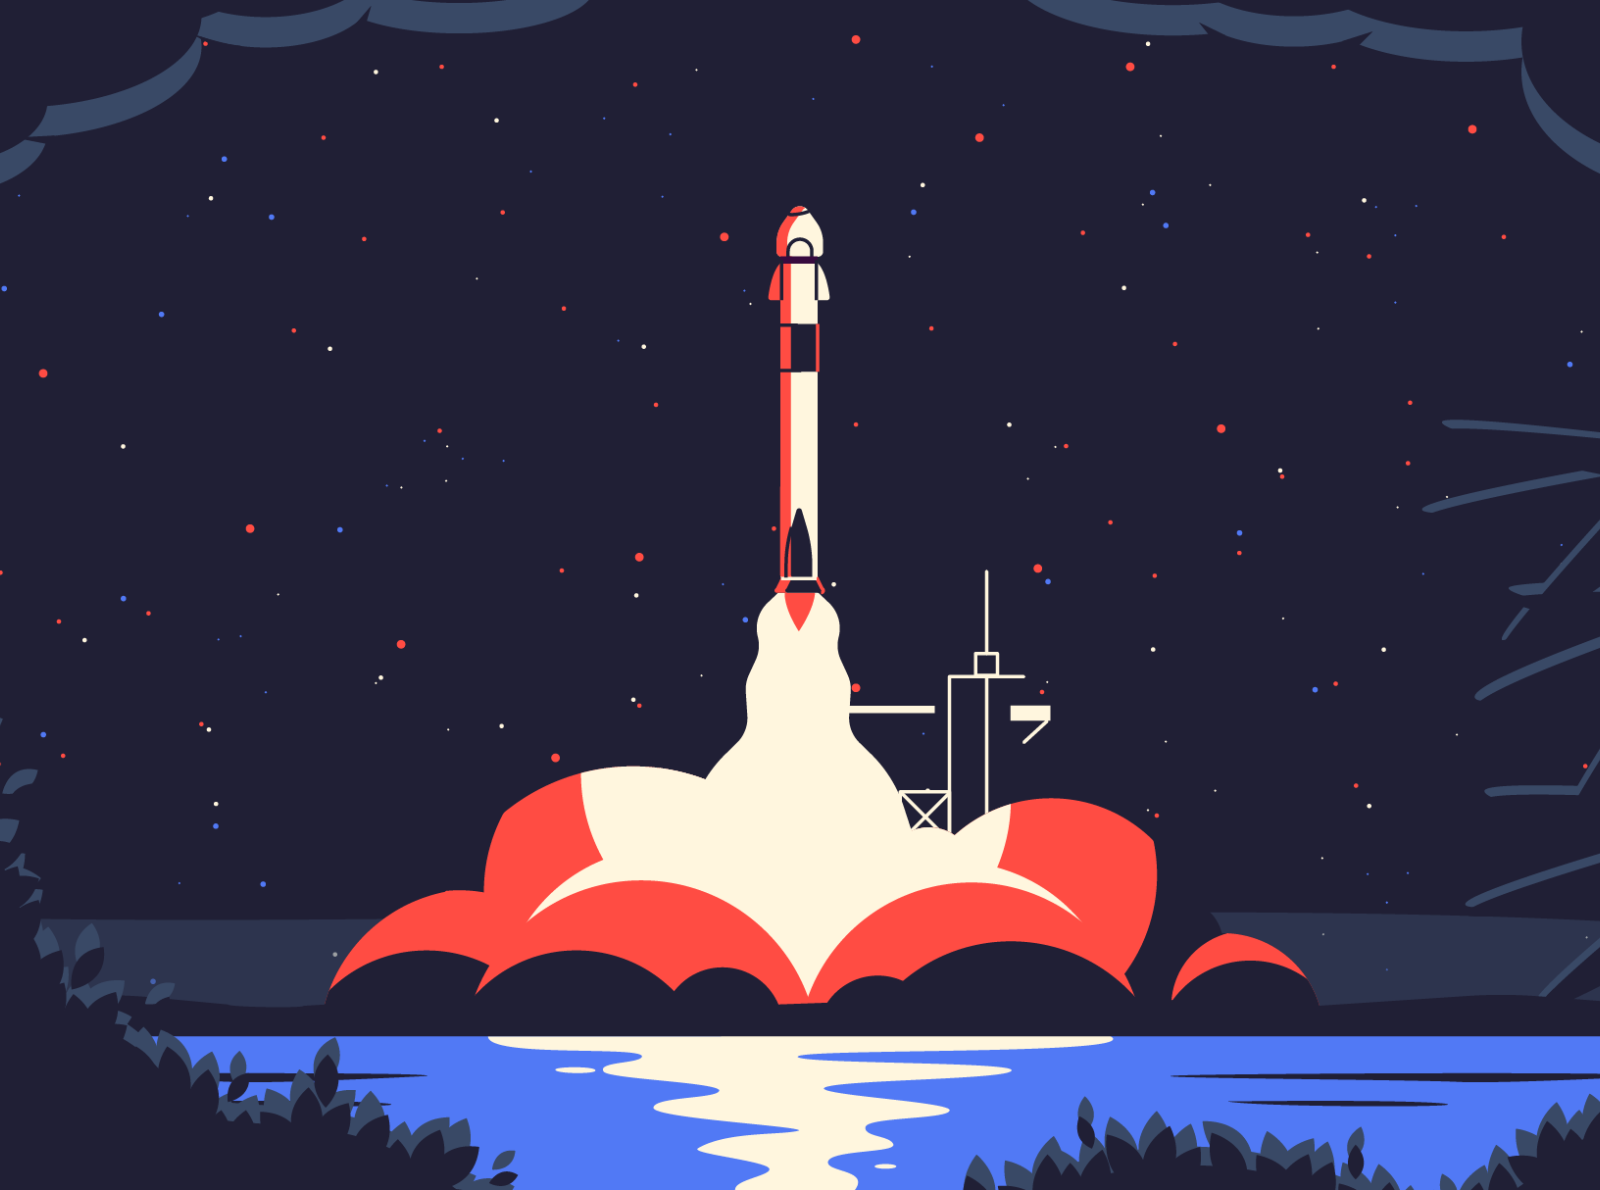  Rocket Launch by Nat lia Brondani on Dribbble